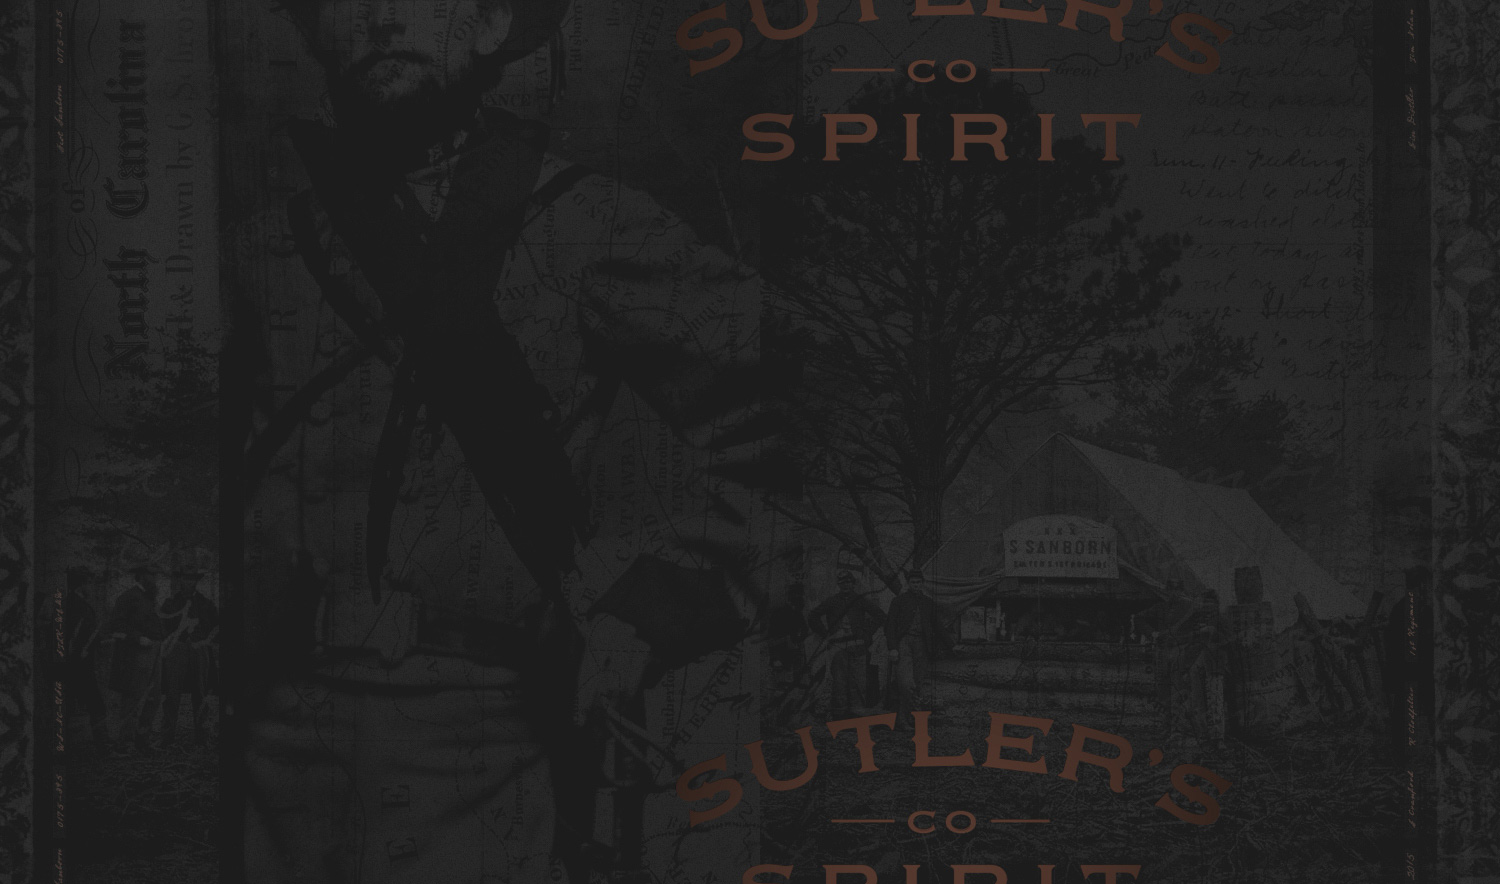 Sutler's Spirit Co Distillery: Brand Development & Packaging Design